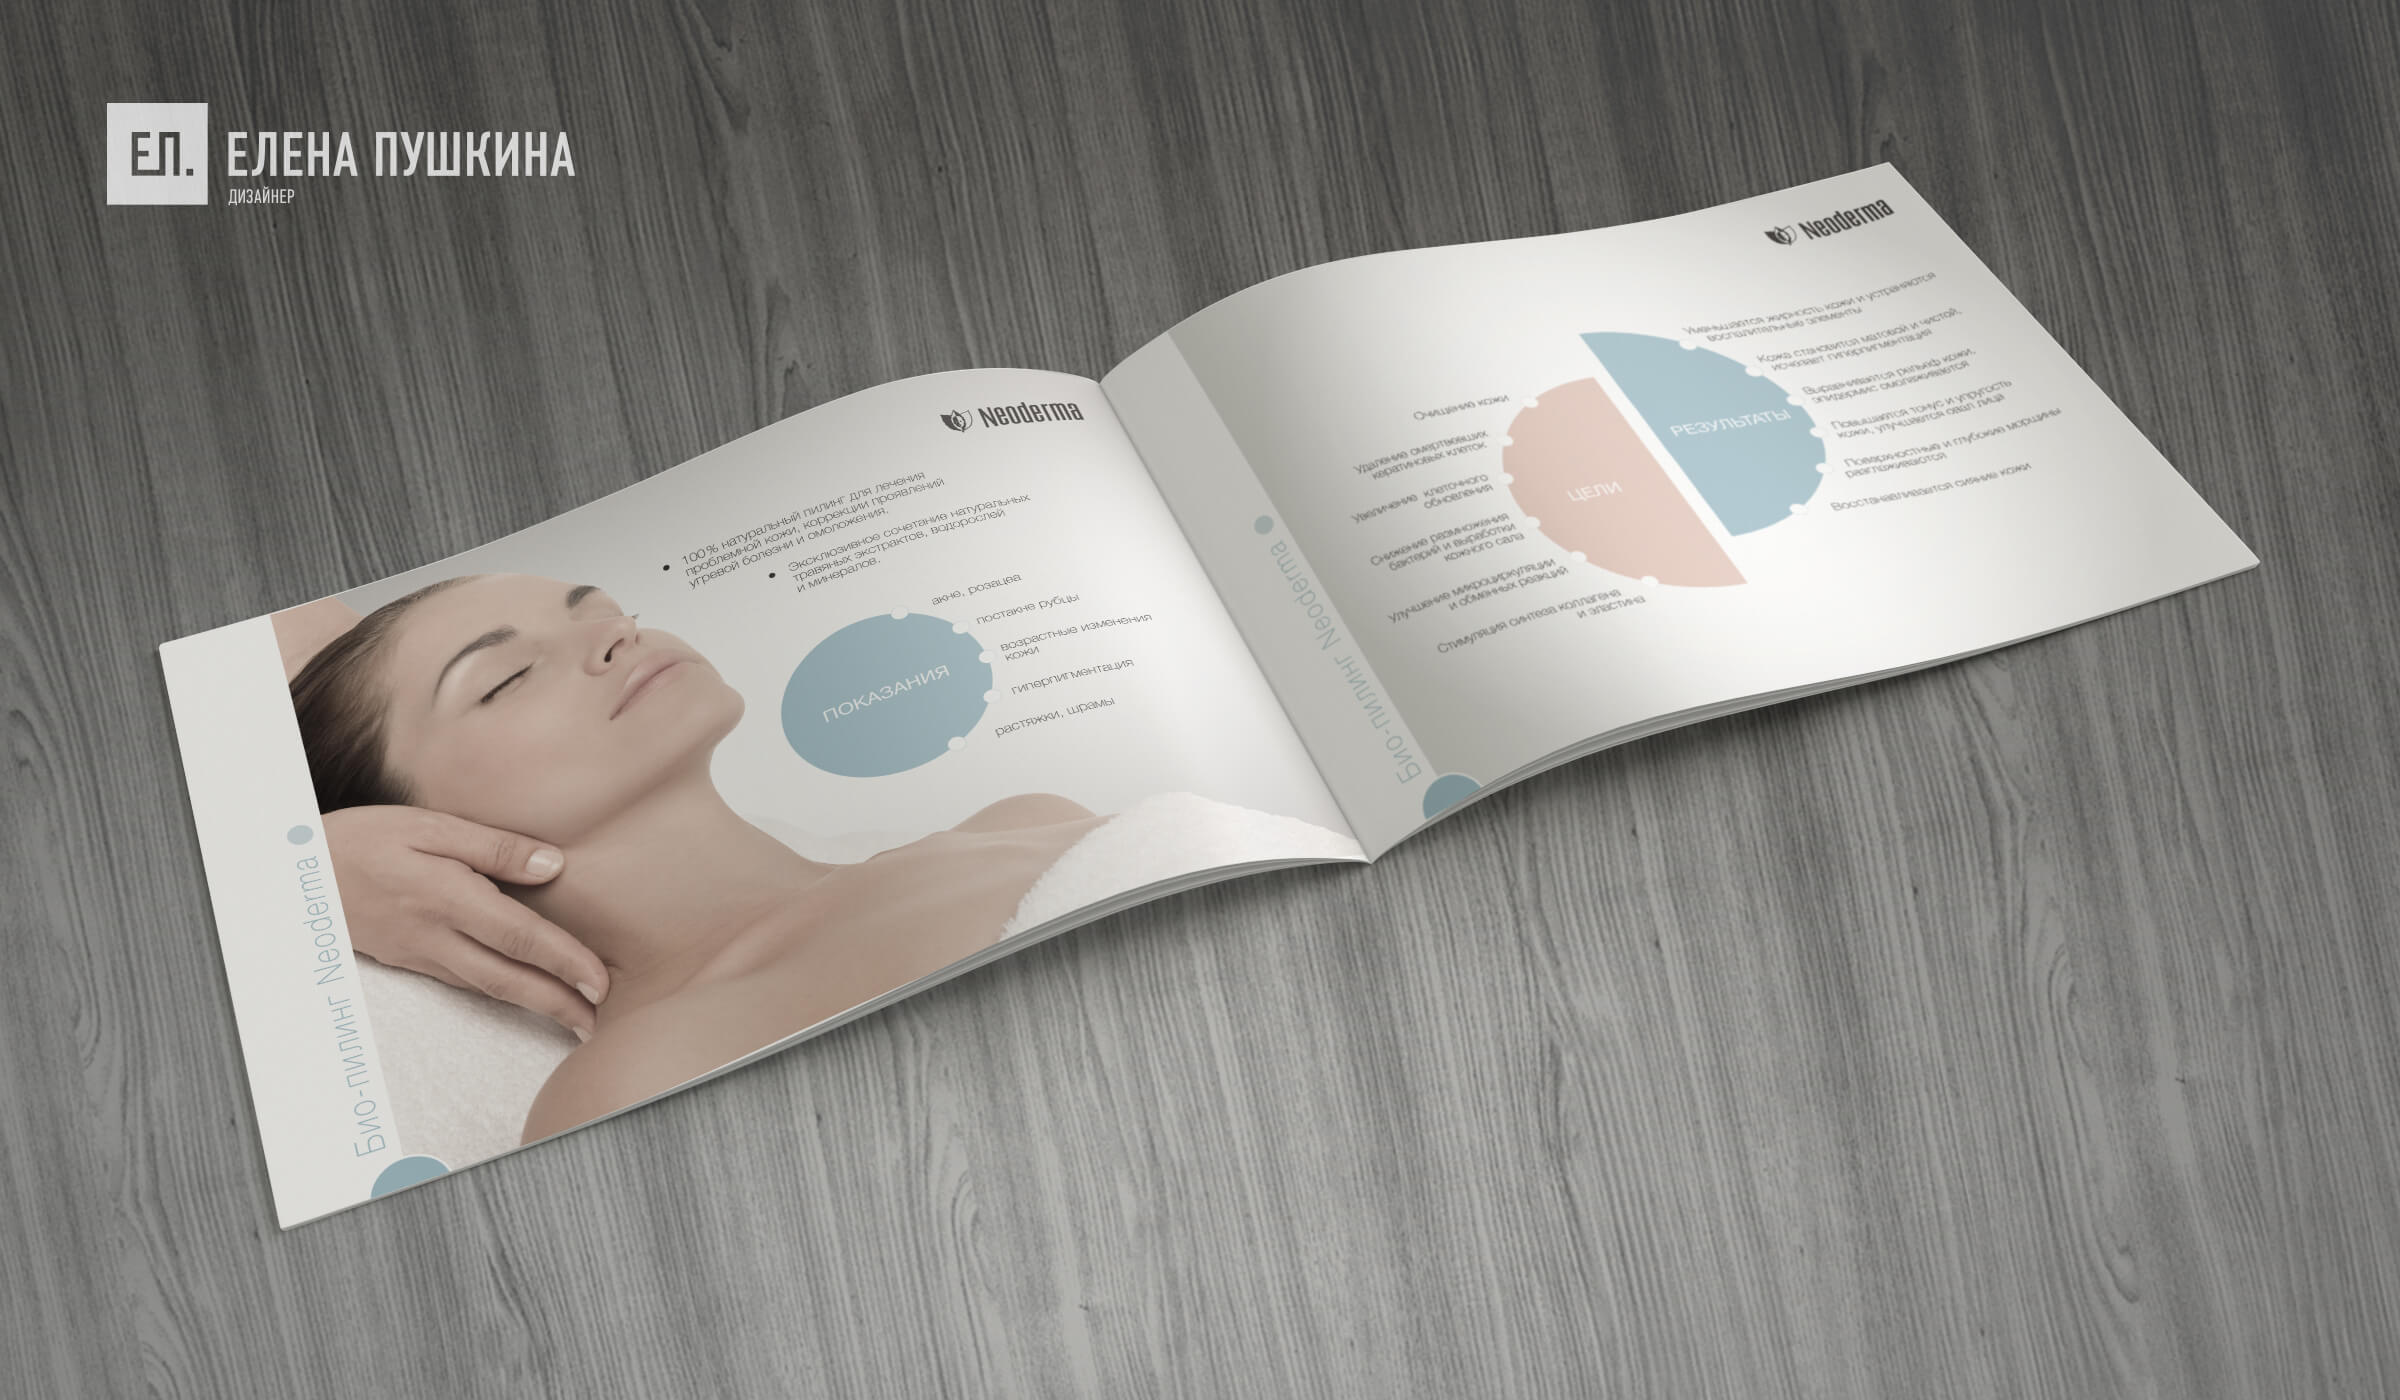 Каталог косметической продукции «NEODERMA» — дизайн с «нуля» обложки, макета и вёрстка каталога Дизайн каталогов Портфолио